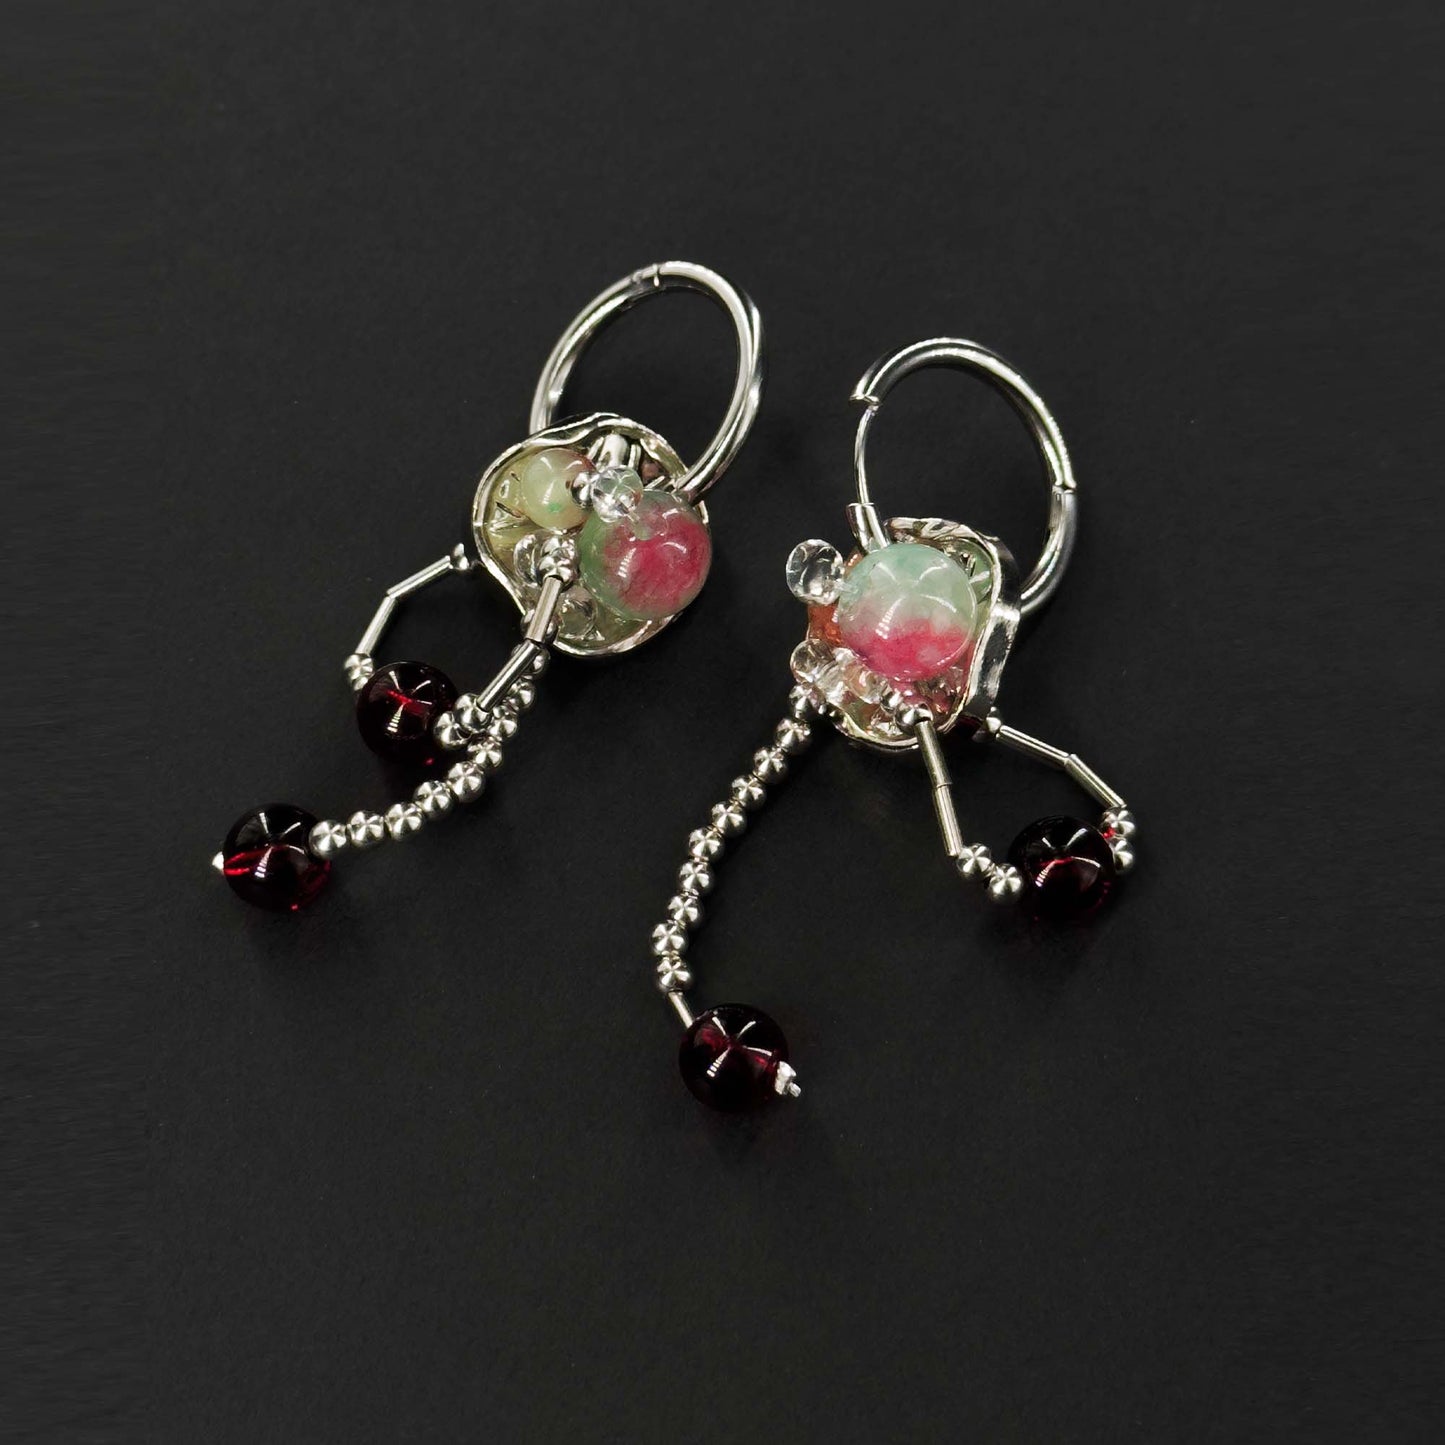 Handmade earrings made of natural stone, colored glaze